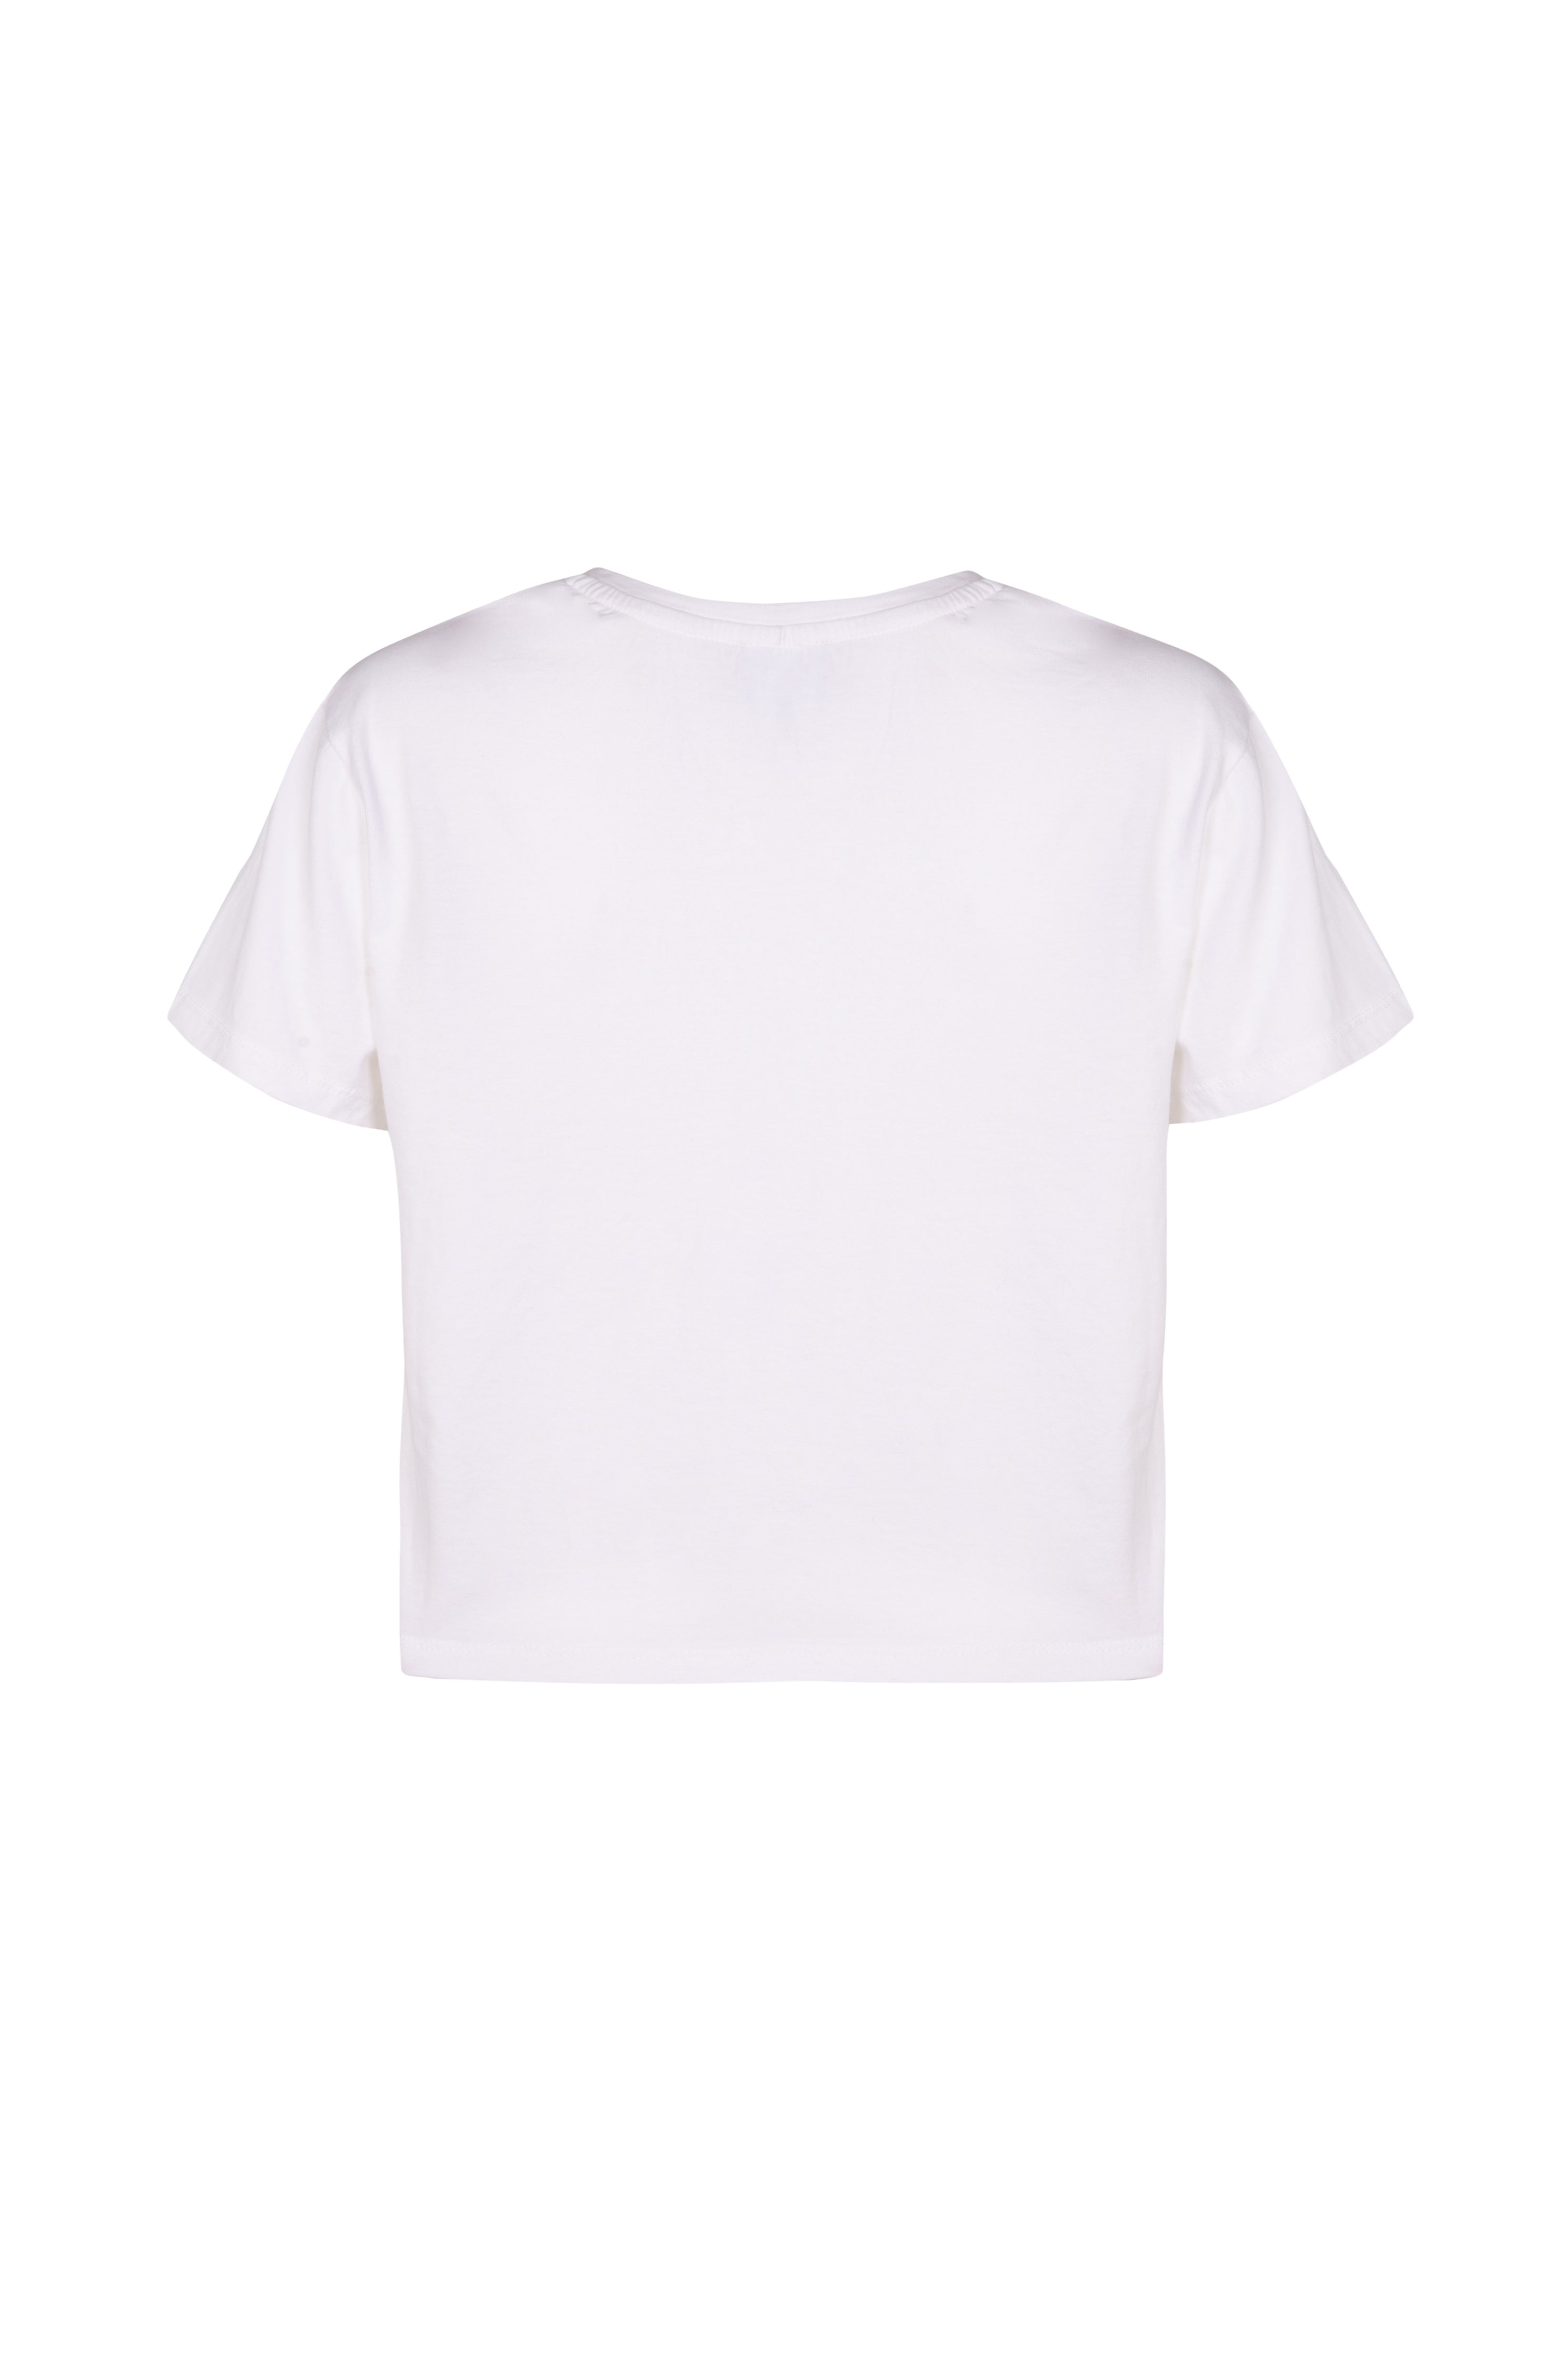 Back of white organic cotton boxy fit cropped women's t-shirt